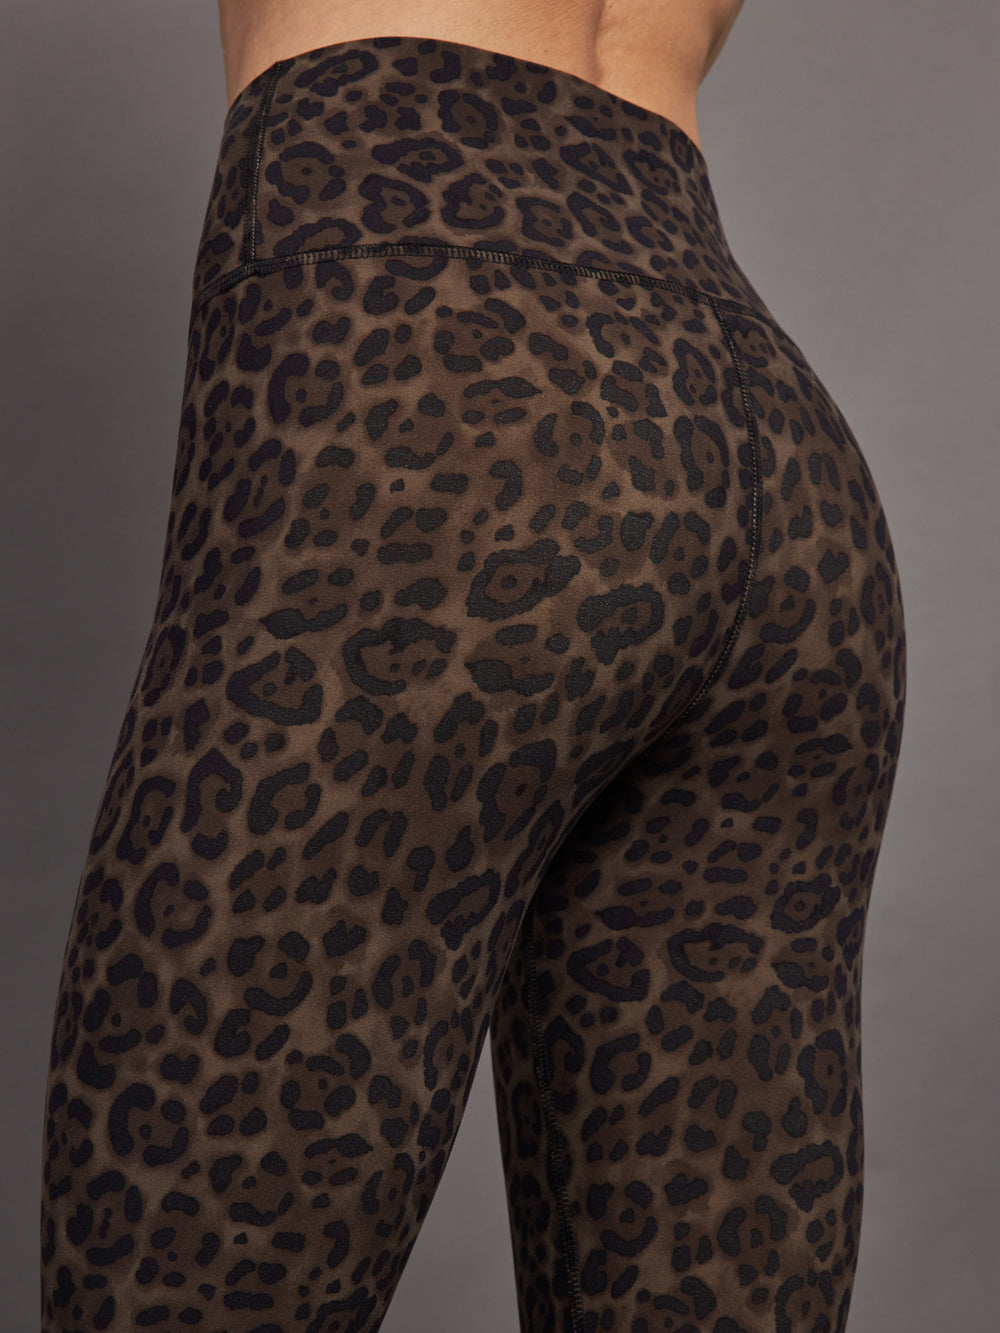 NWOT Alo Yoga High Waist Vapor white Leopard Legging Carbon38 L $128 rare  hot!!!